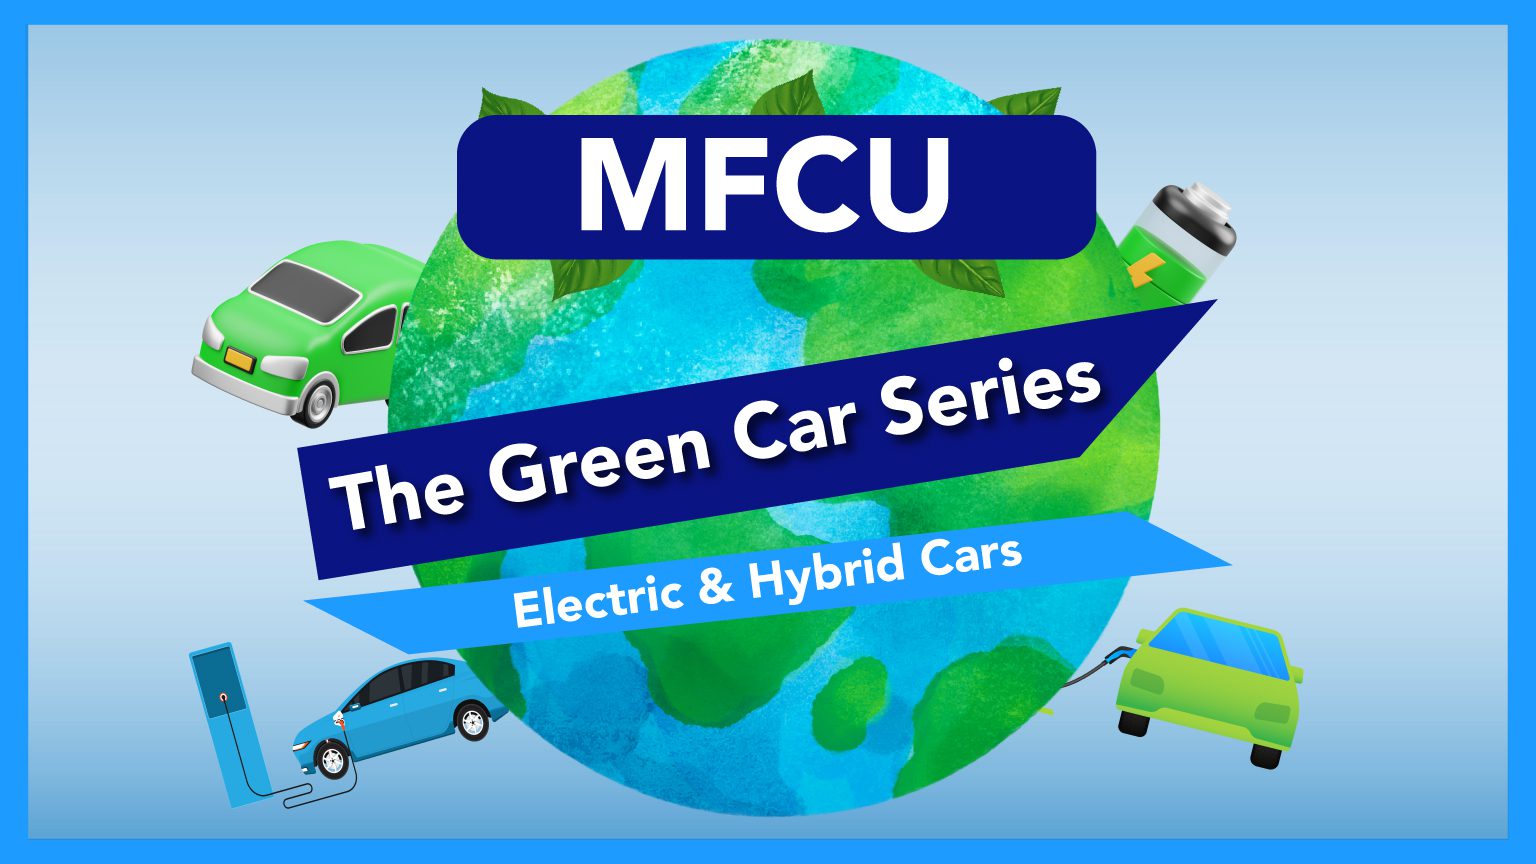 The Green Car Series